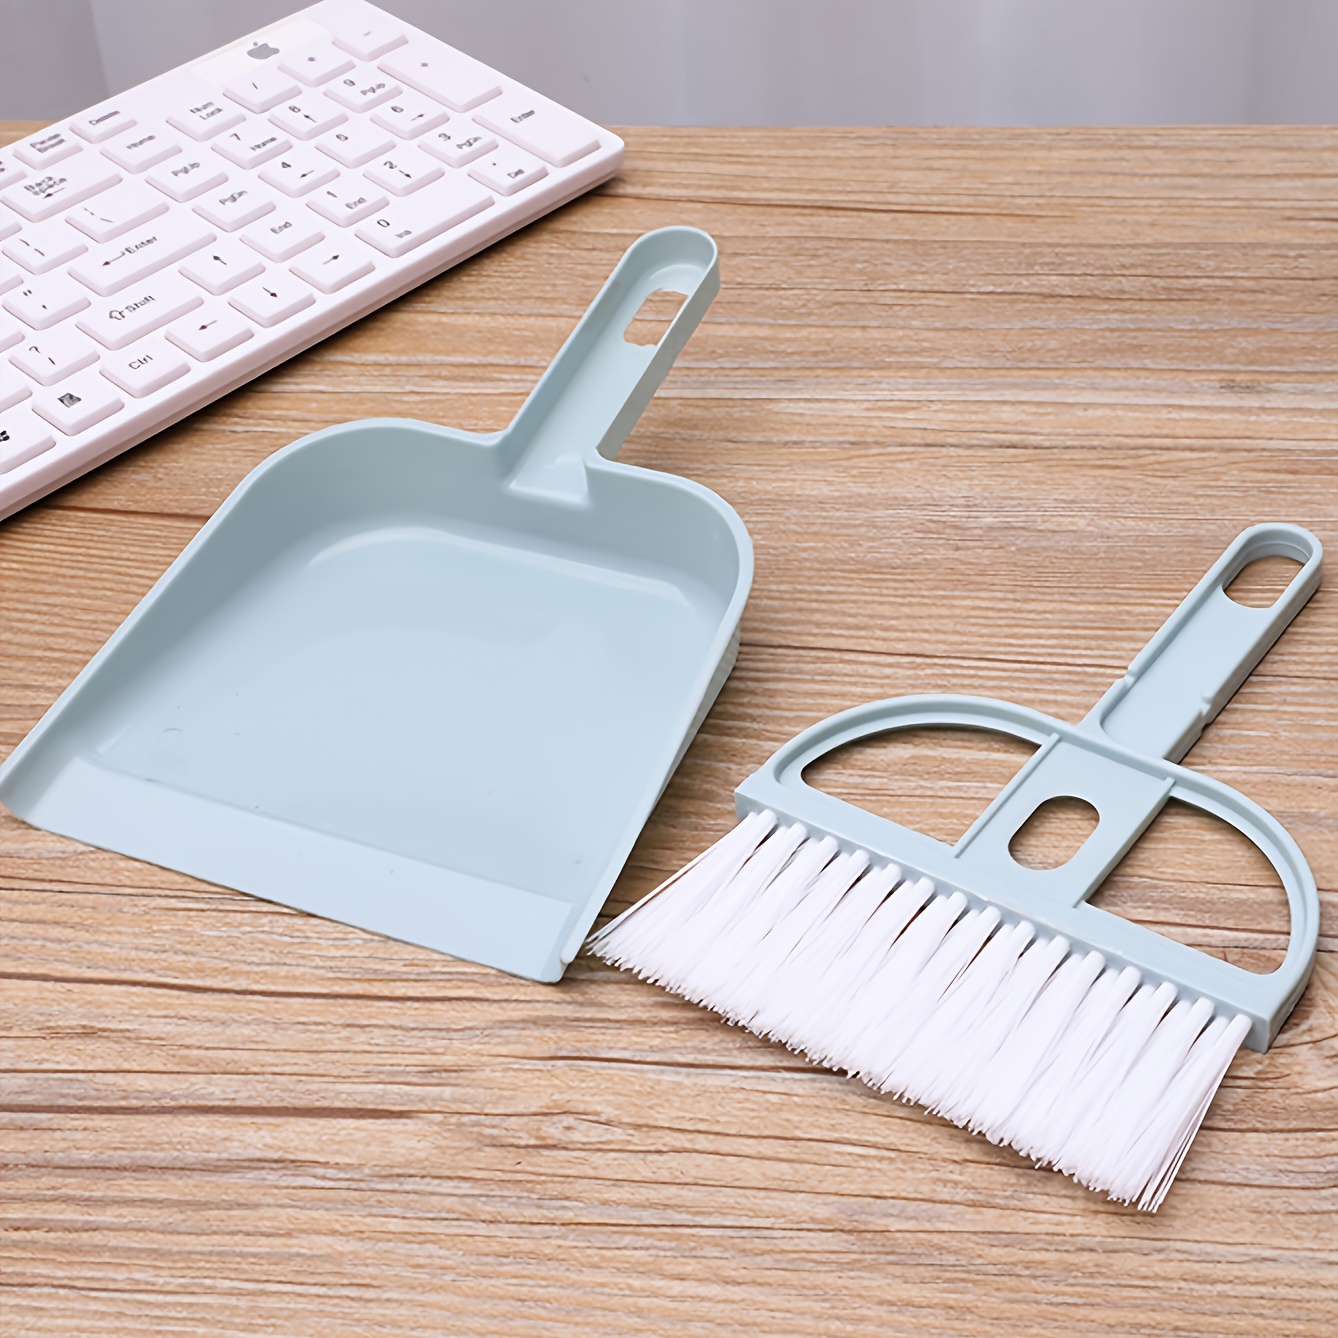 1pc Desktop Mini Broom Keyboard Cleaning Brush Small Broom Set